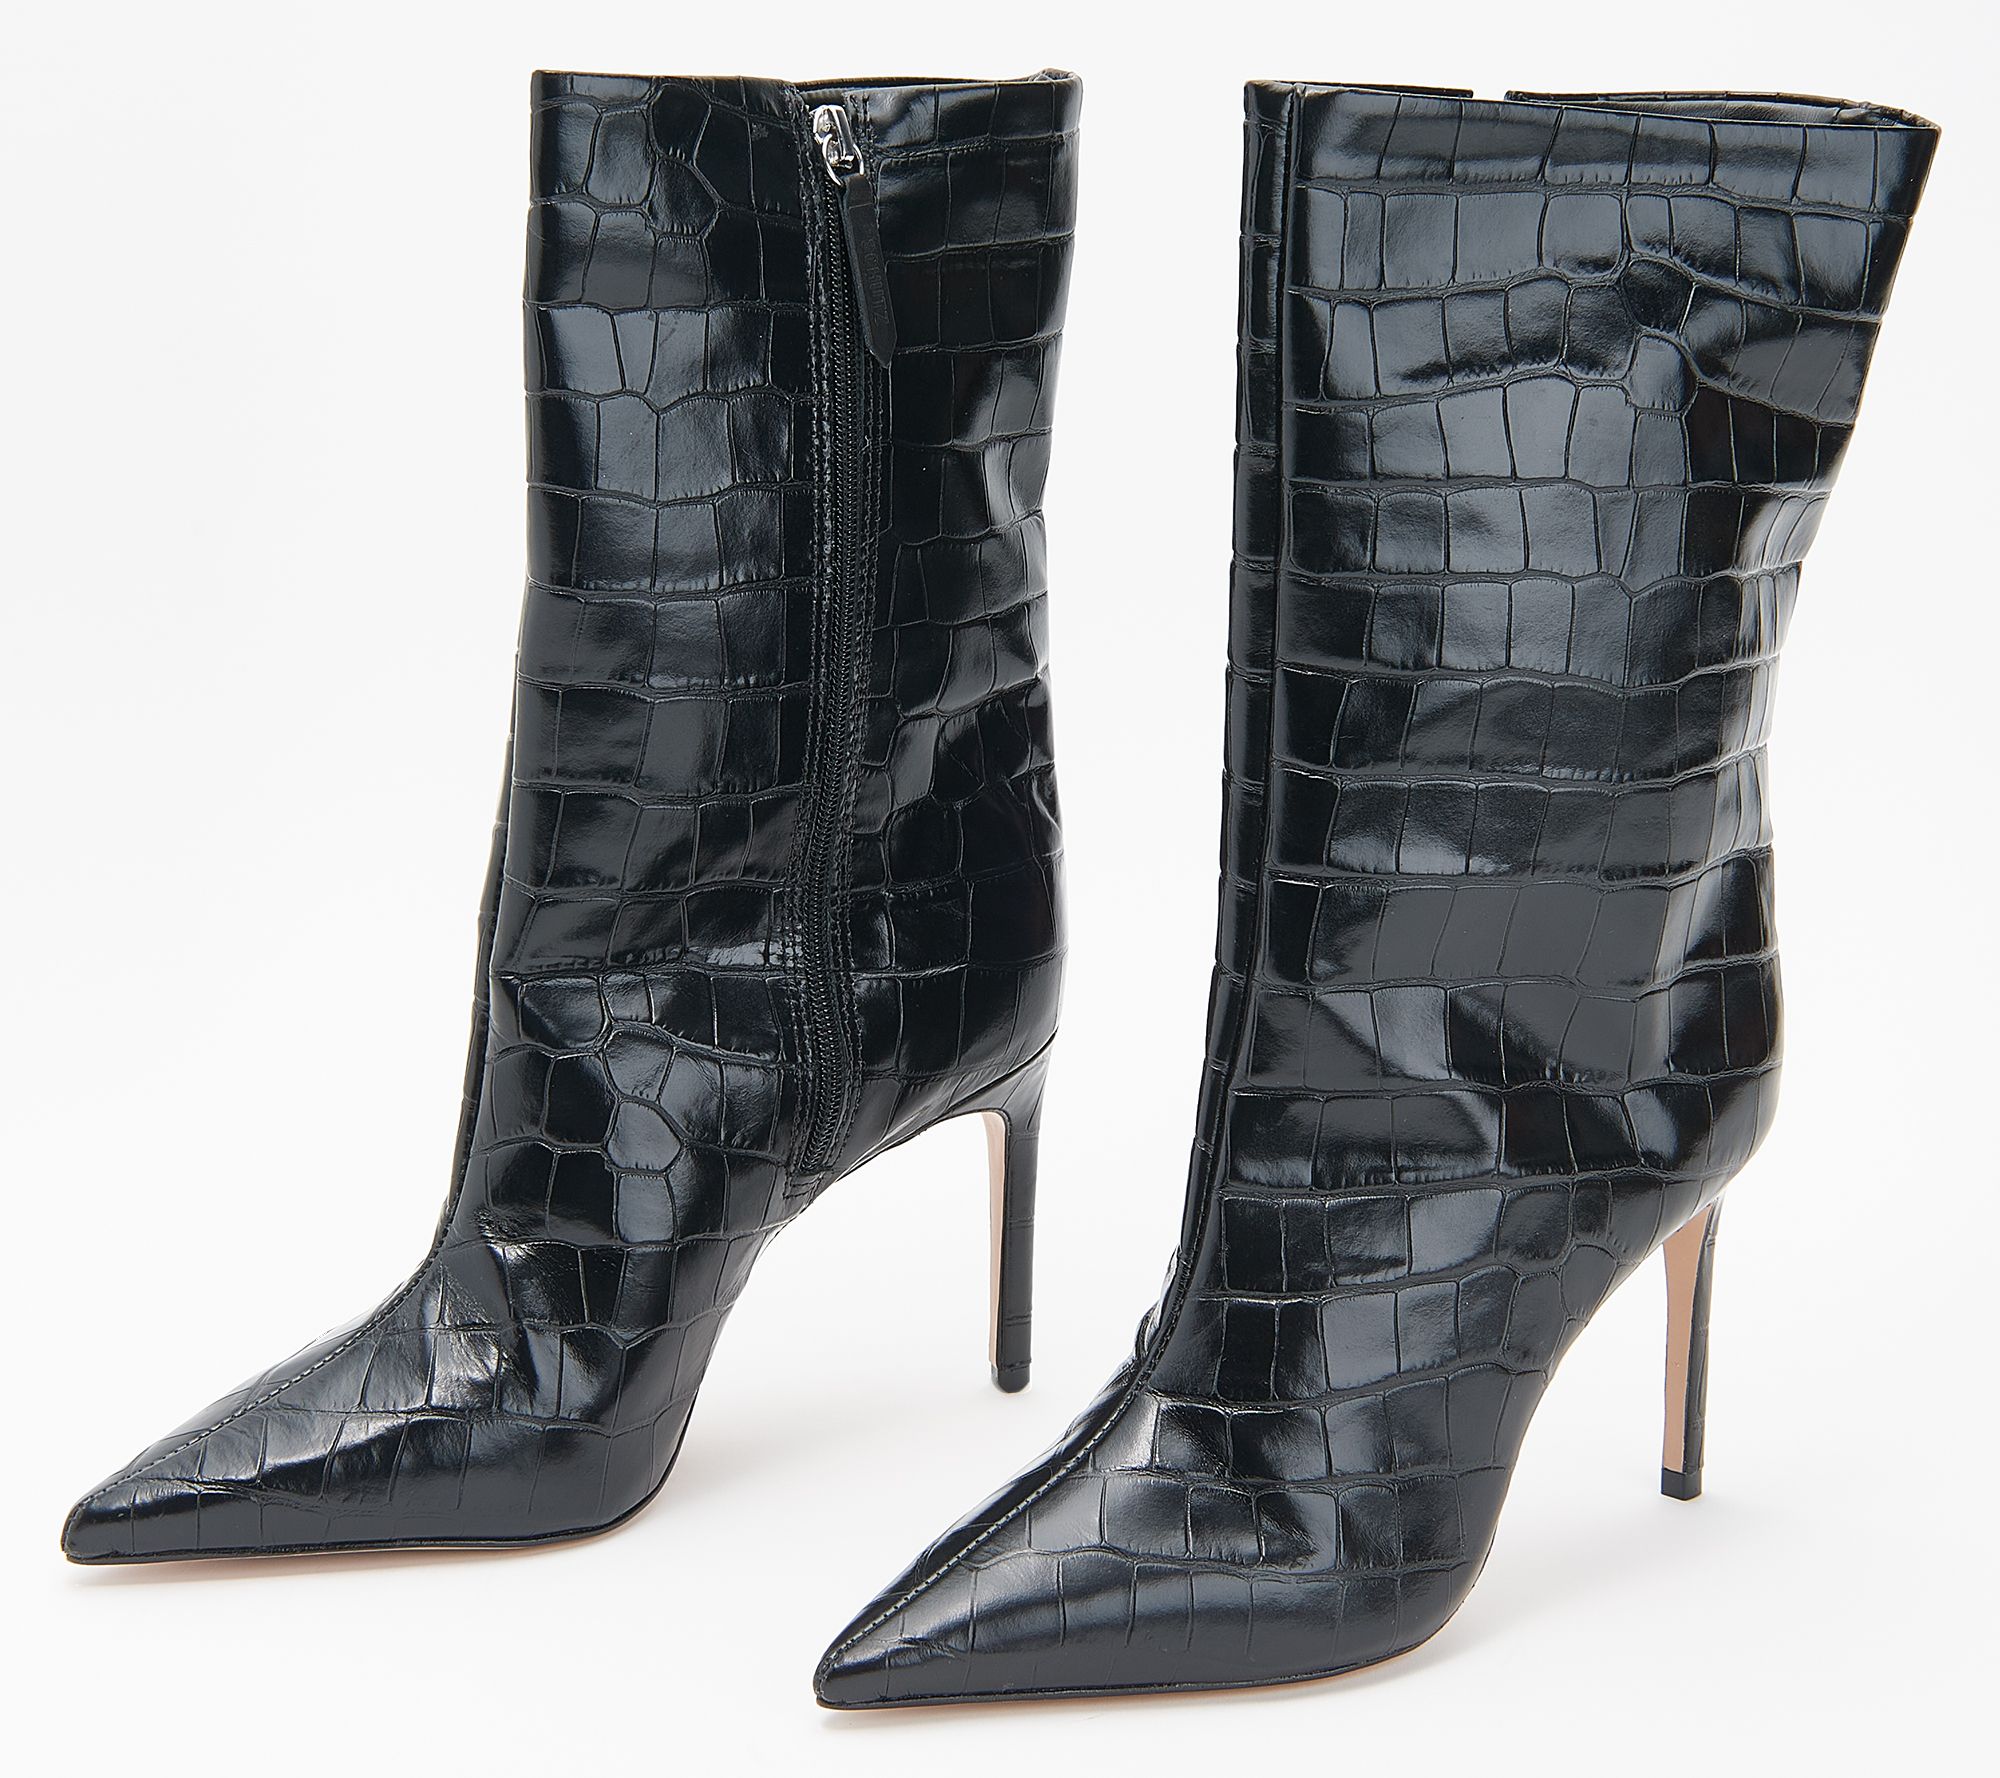 Schutz Leather Croco Heeled Mid Boots - Lun 